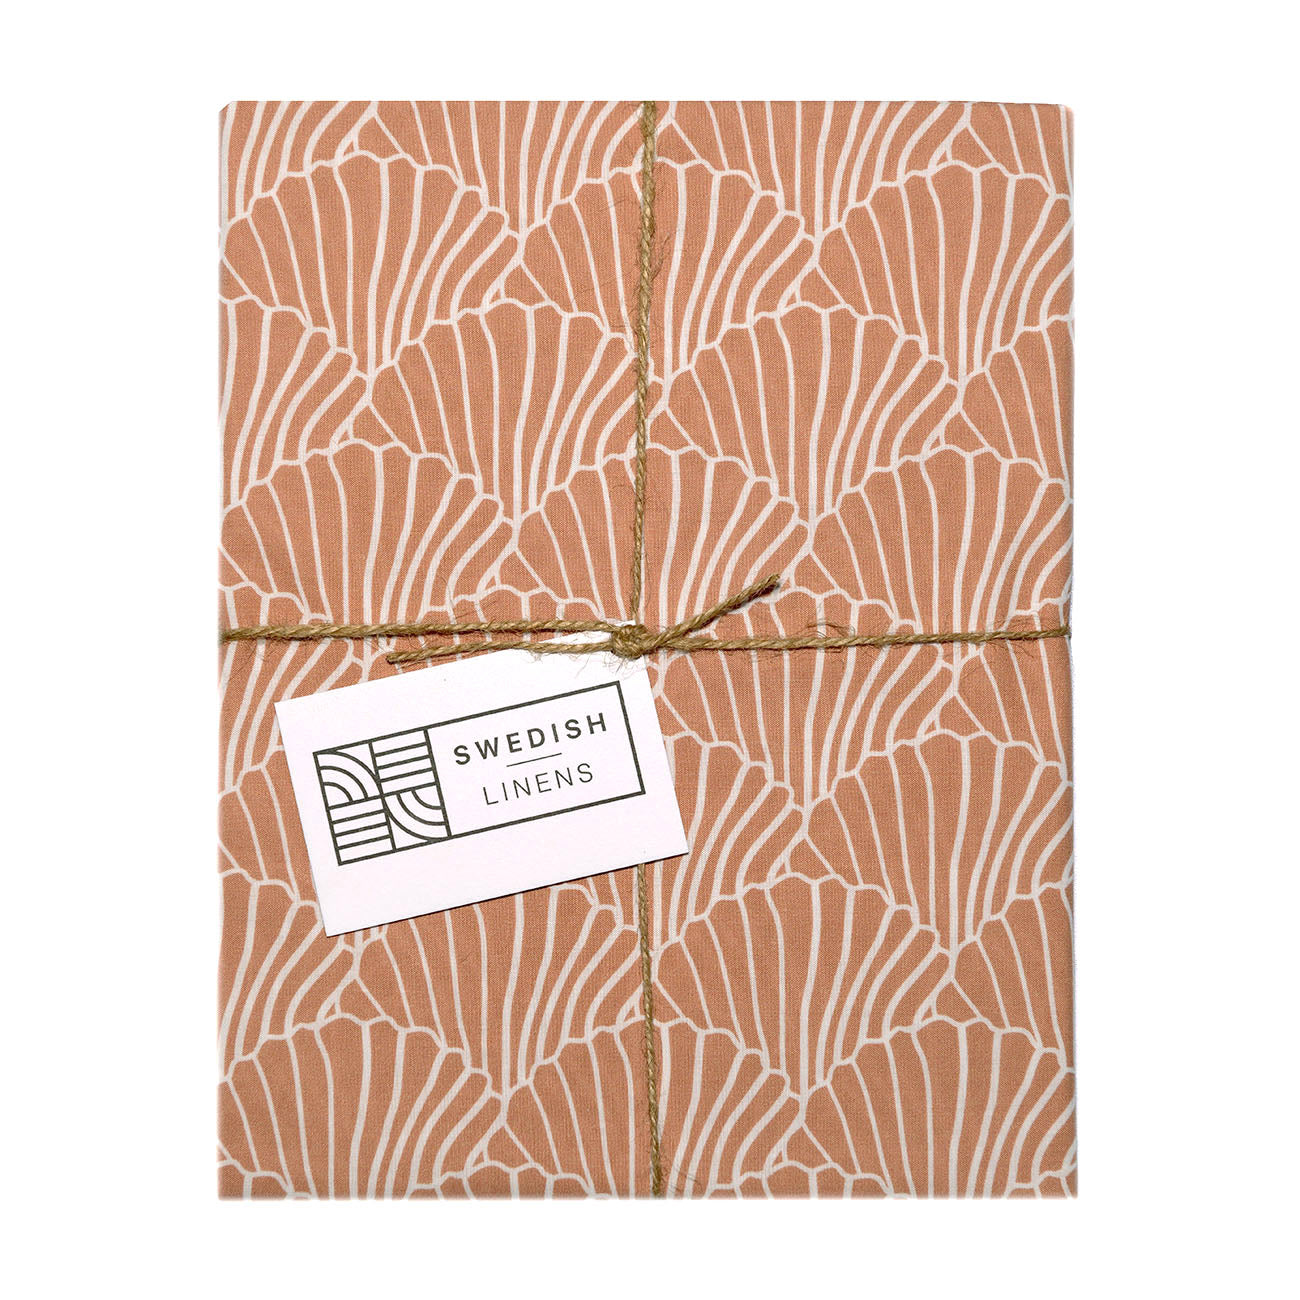 SEASHELLS | Terracotta pink | Pillowcase | 50x75cm / 19.6x29.5&quot;